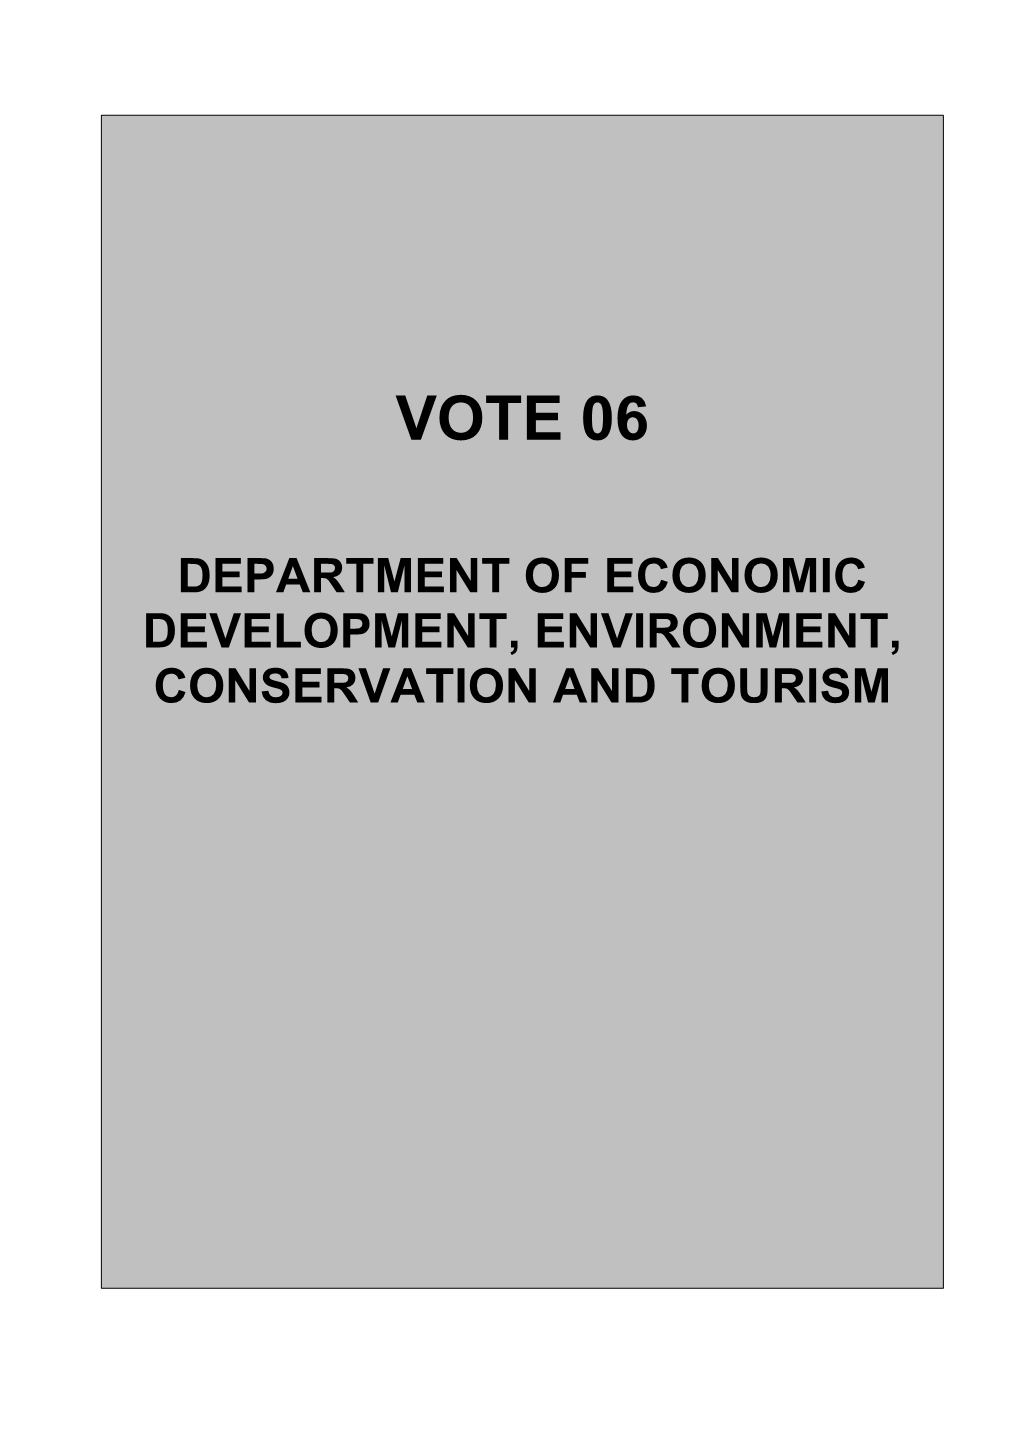 Economic Development, Environment, Conservation and Tourism